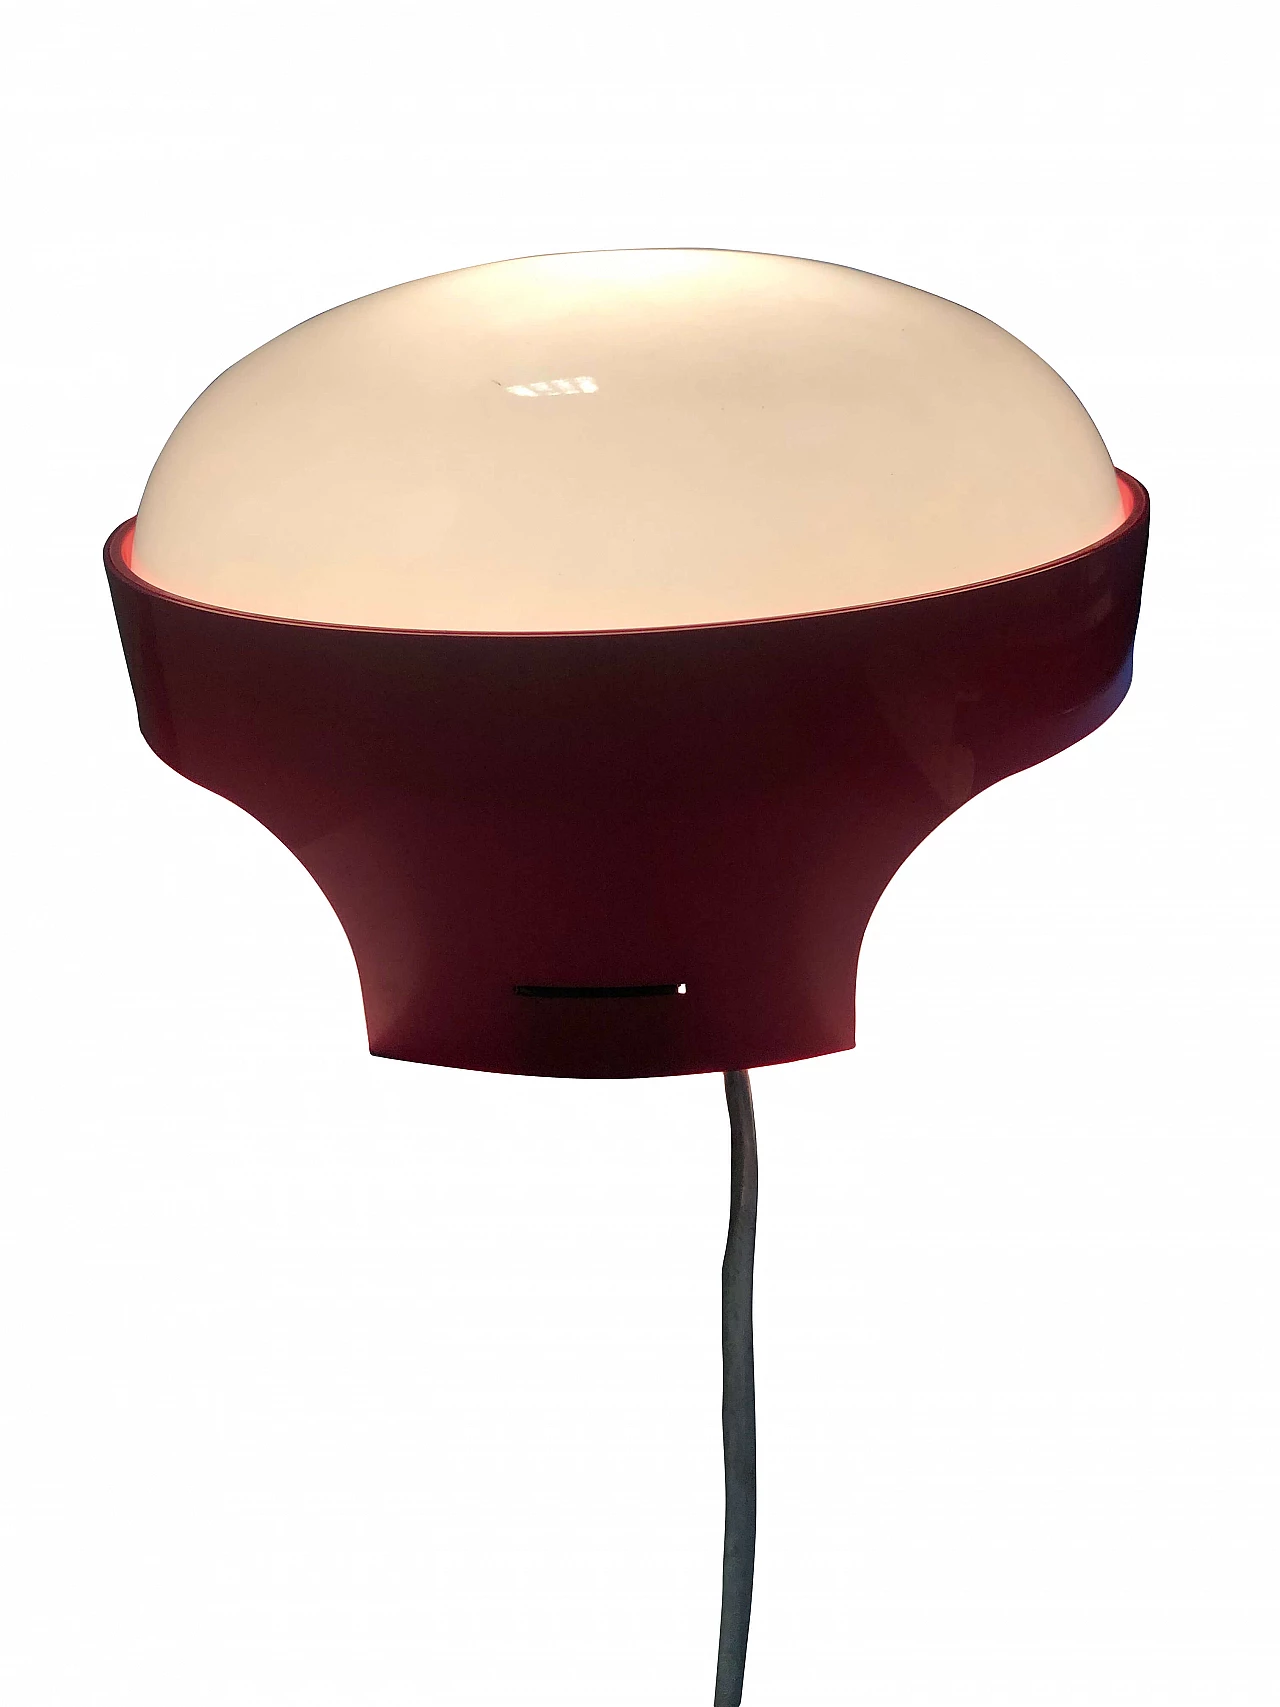 Lamp by Joe Colombo for Kartell 1149125